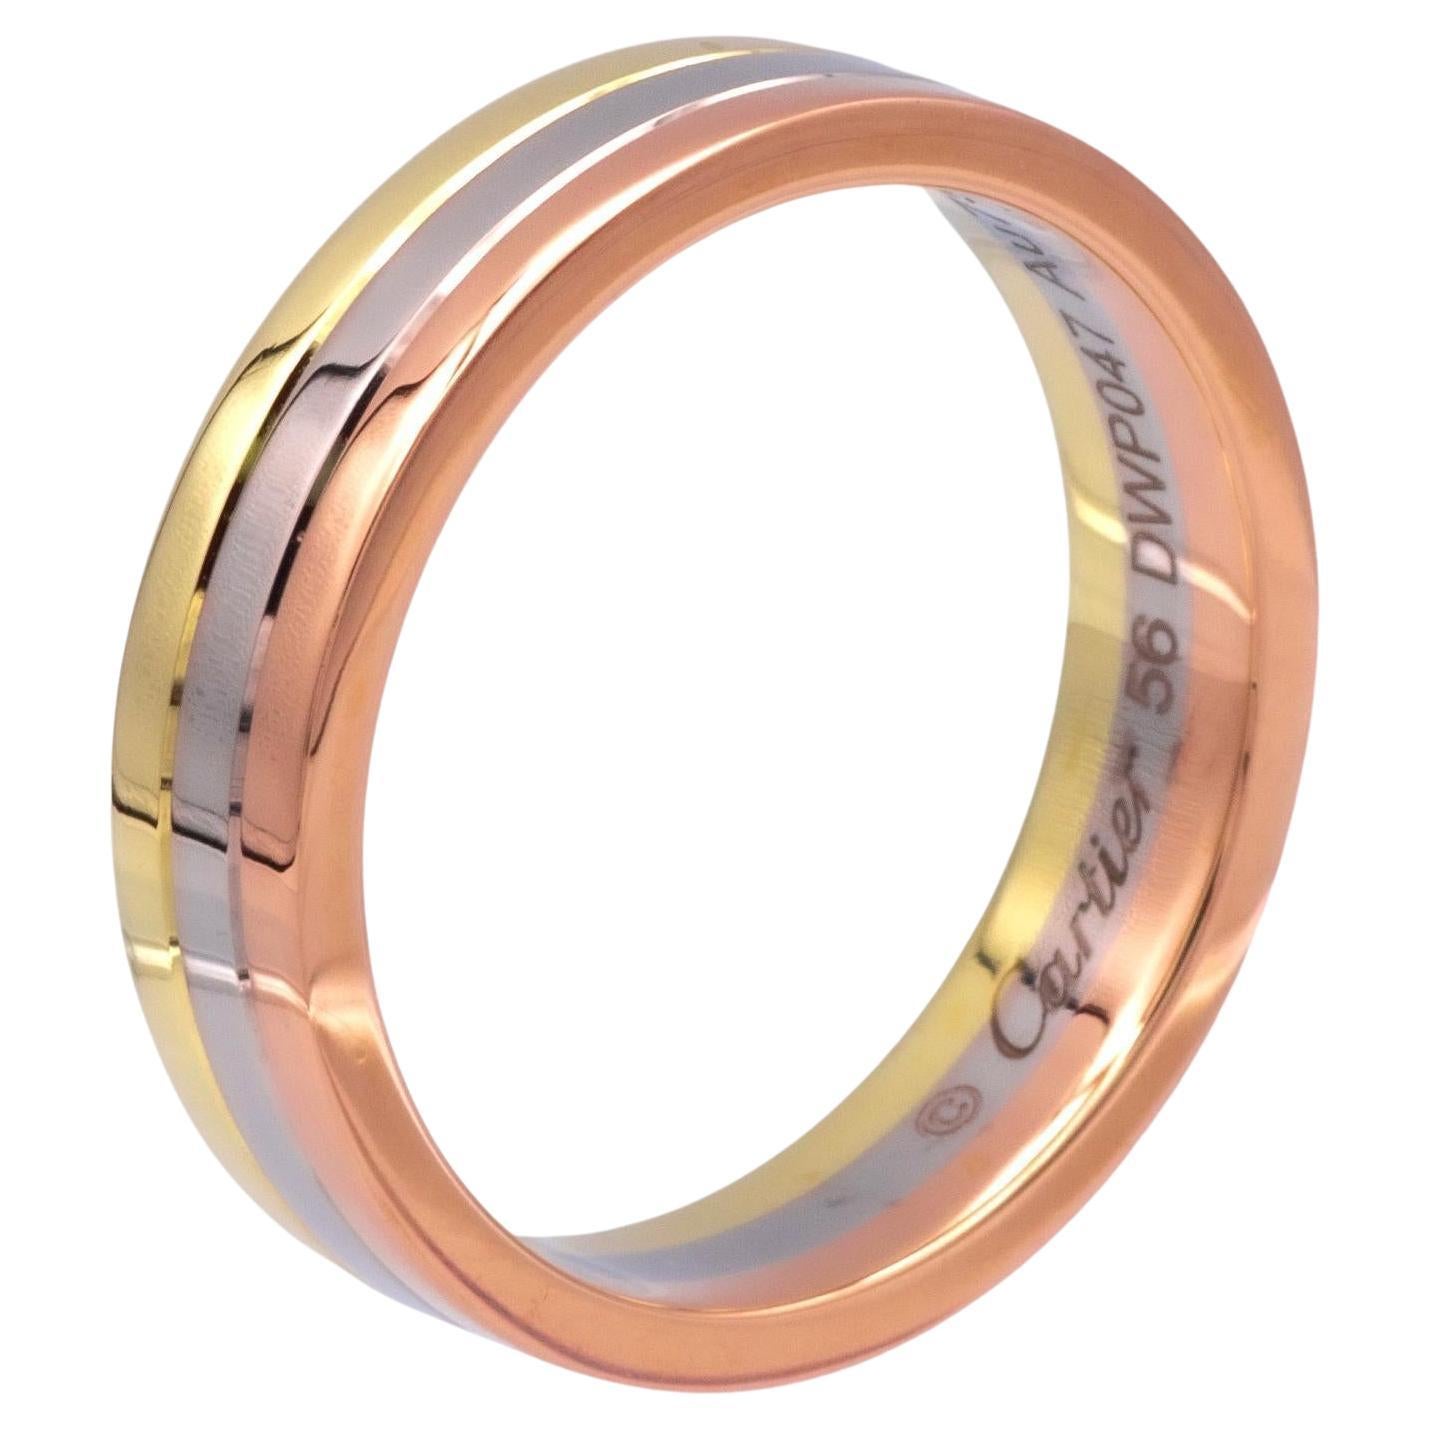 Vendome Louis Cartier 18K 3 Tone Gold Men's Wedding Band Ring Size 56/7.5 4.8mm For Sale